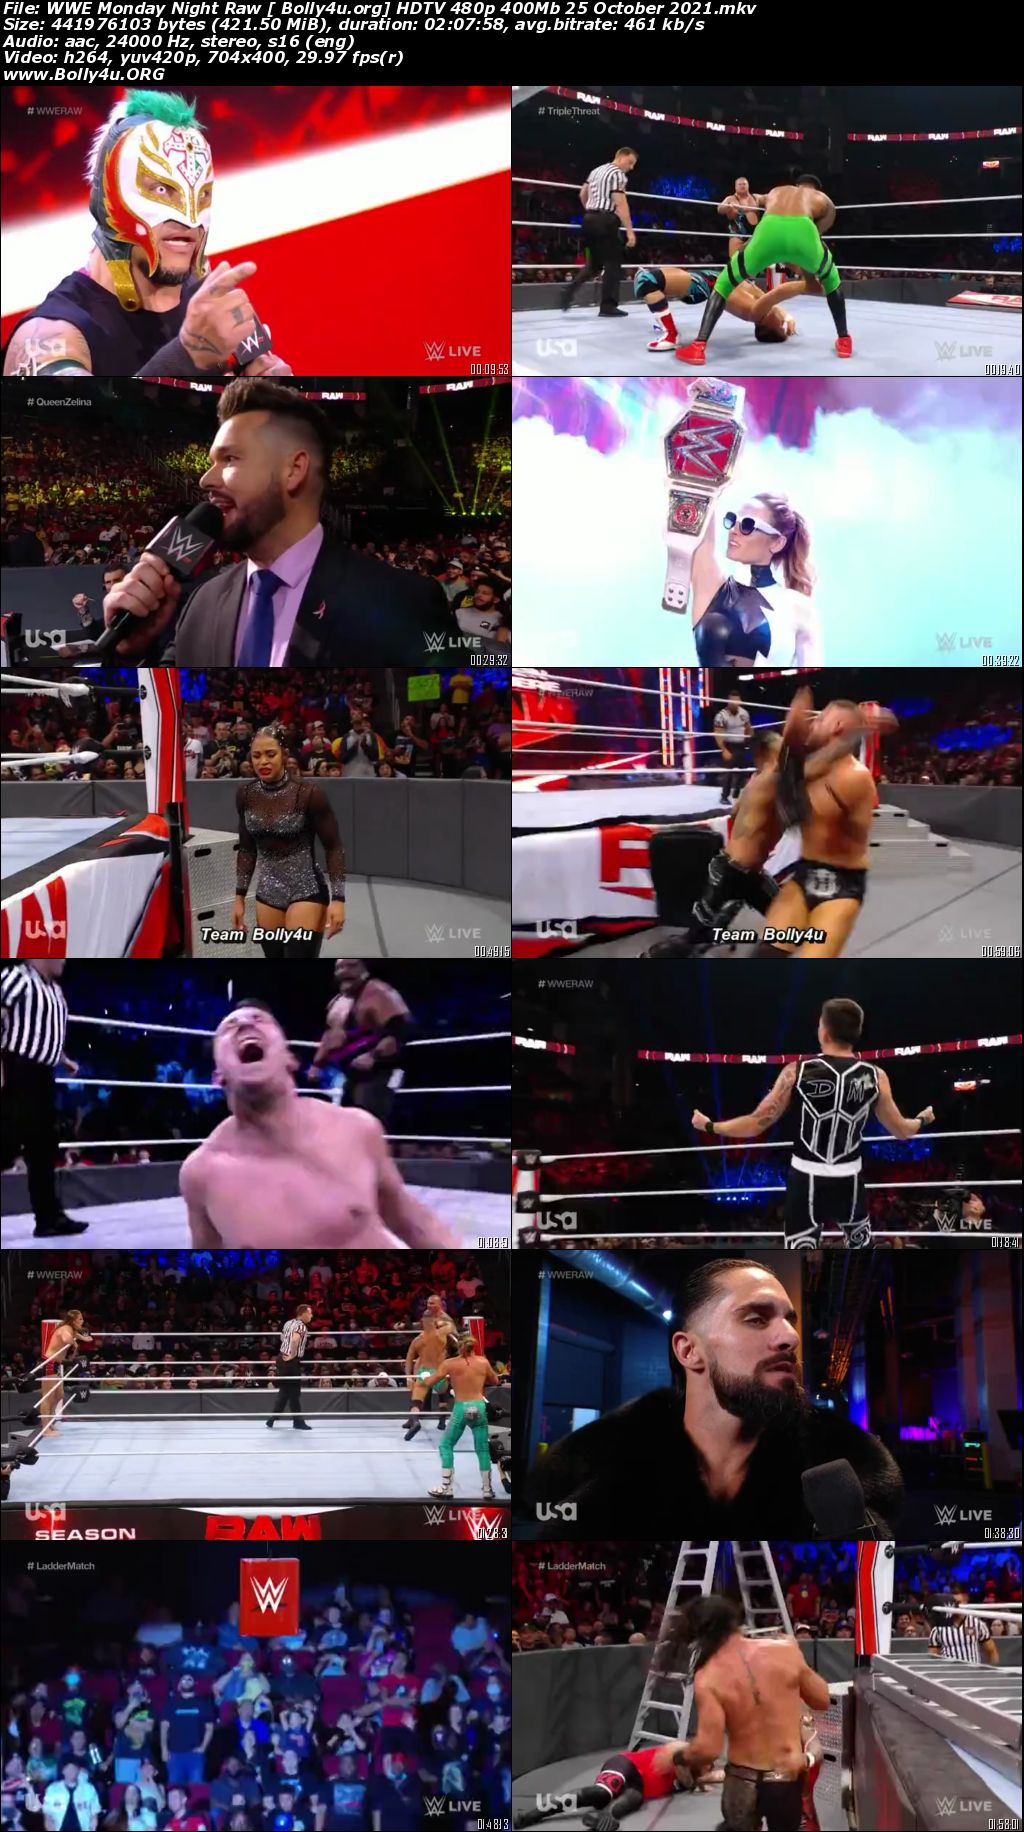 WWE Monday Night Raw HDTV 480p 400Mb 25 October 2021 Download